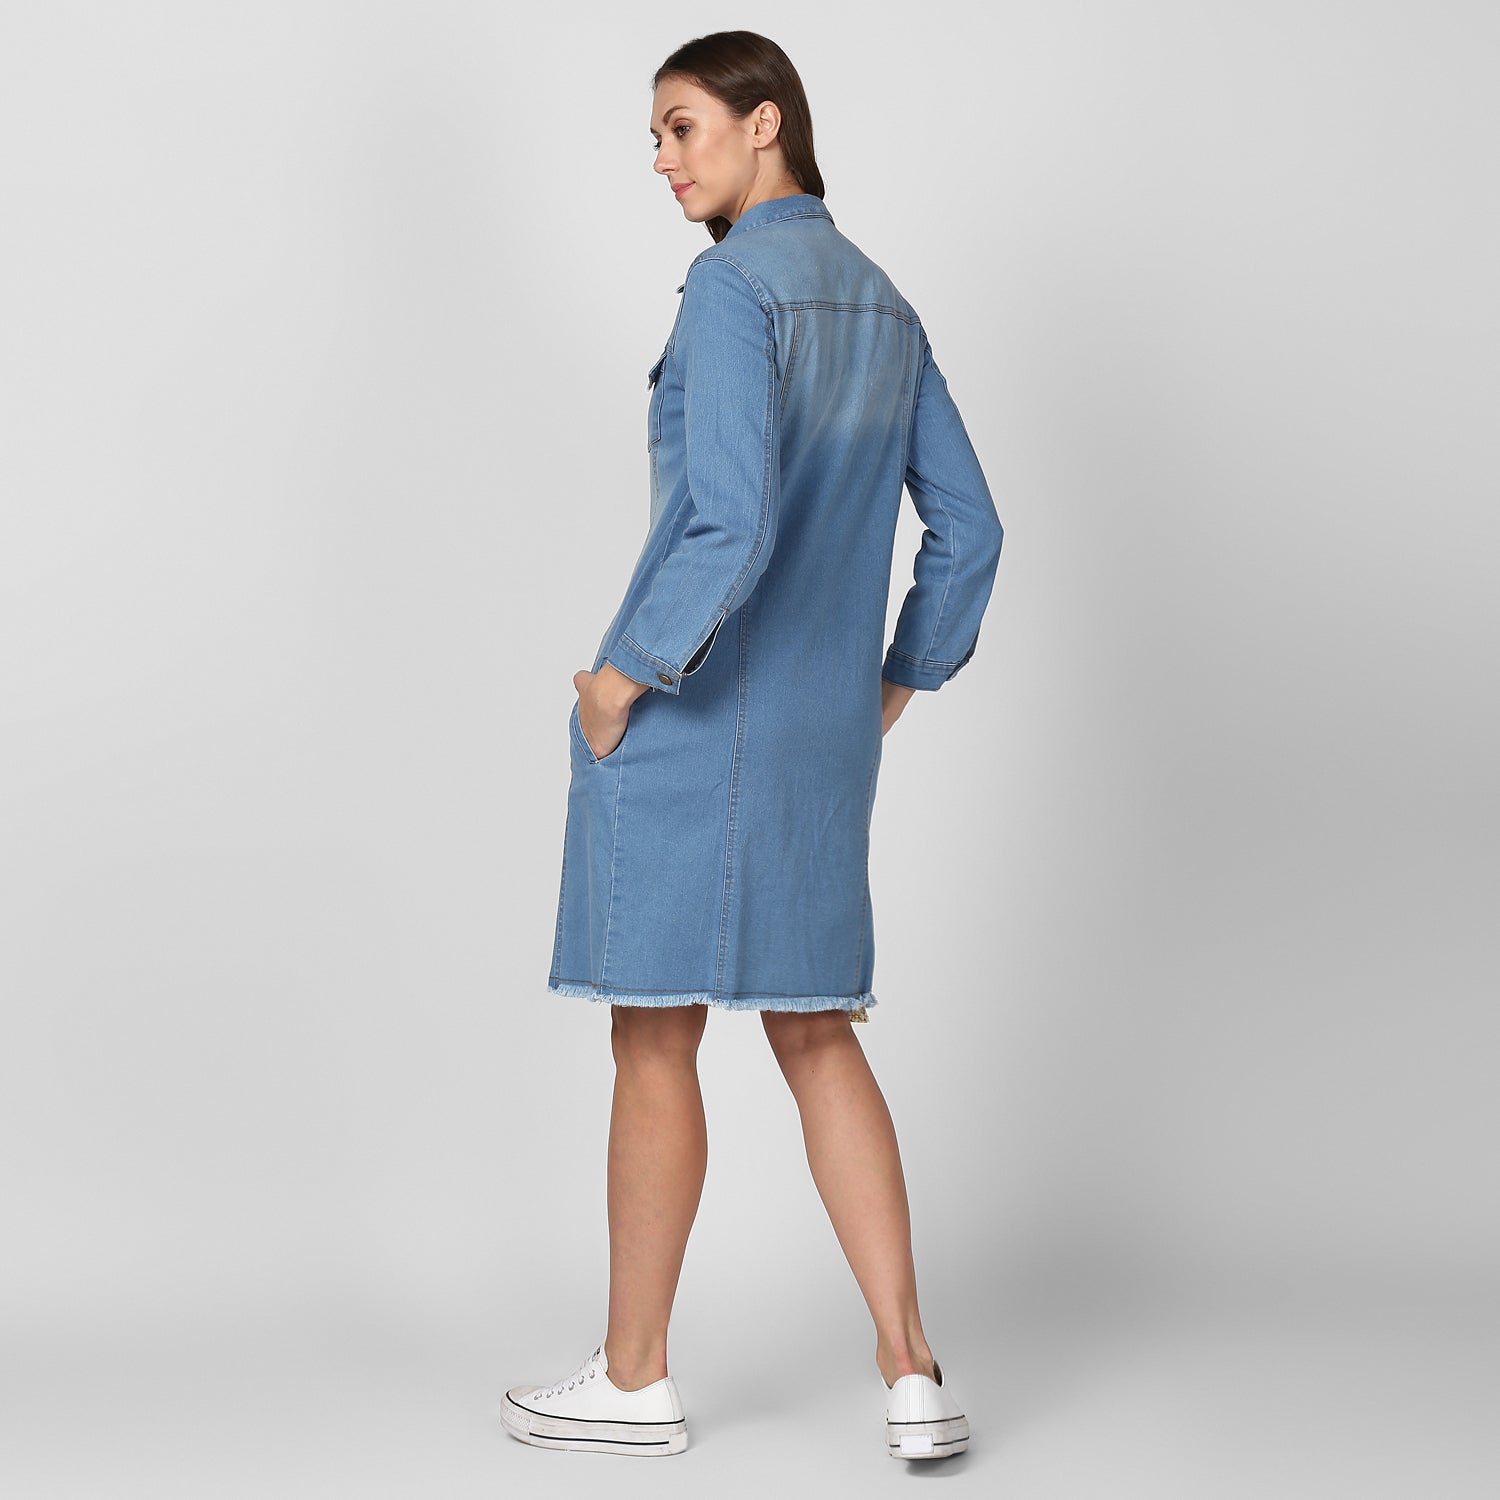 Women's Ice Blue Long Overcoat Style Denim Jacket with Washed effect - StyleStone